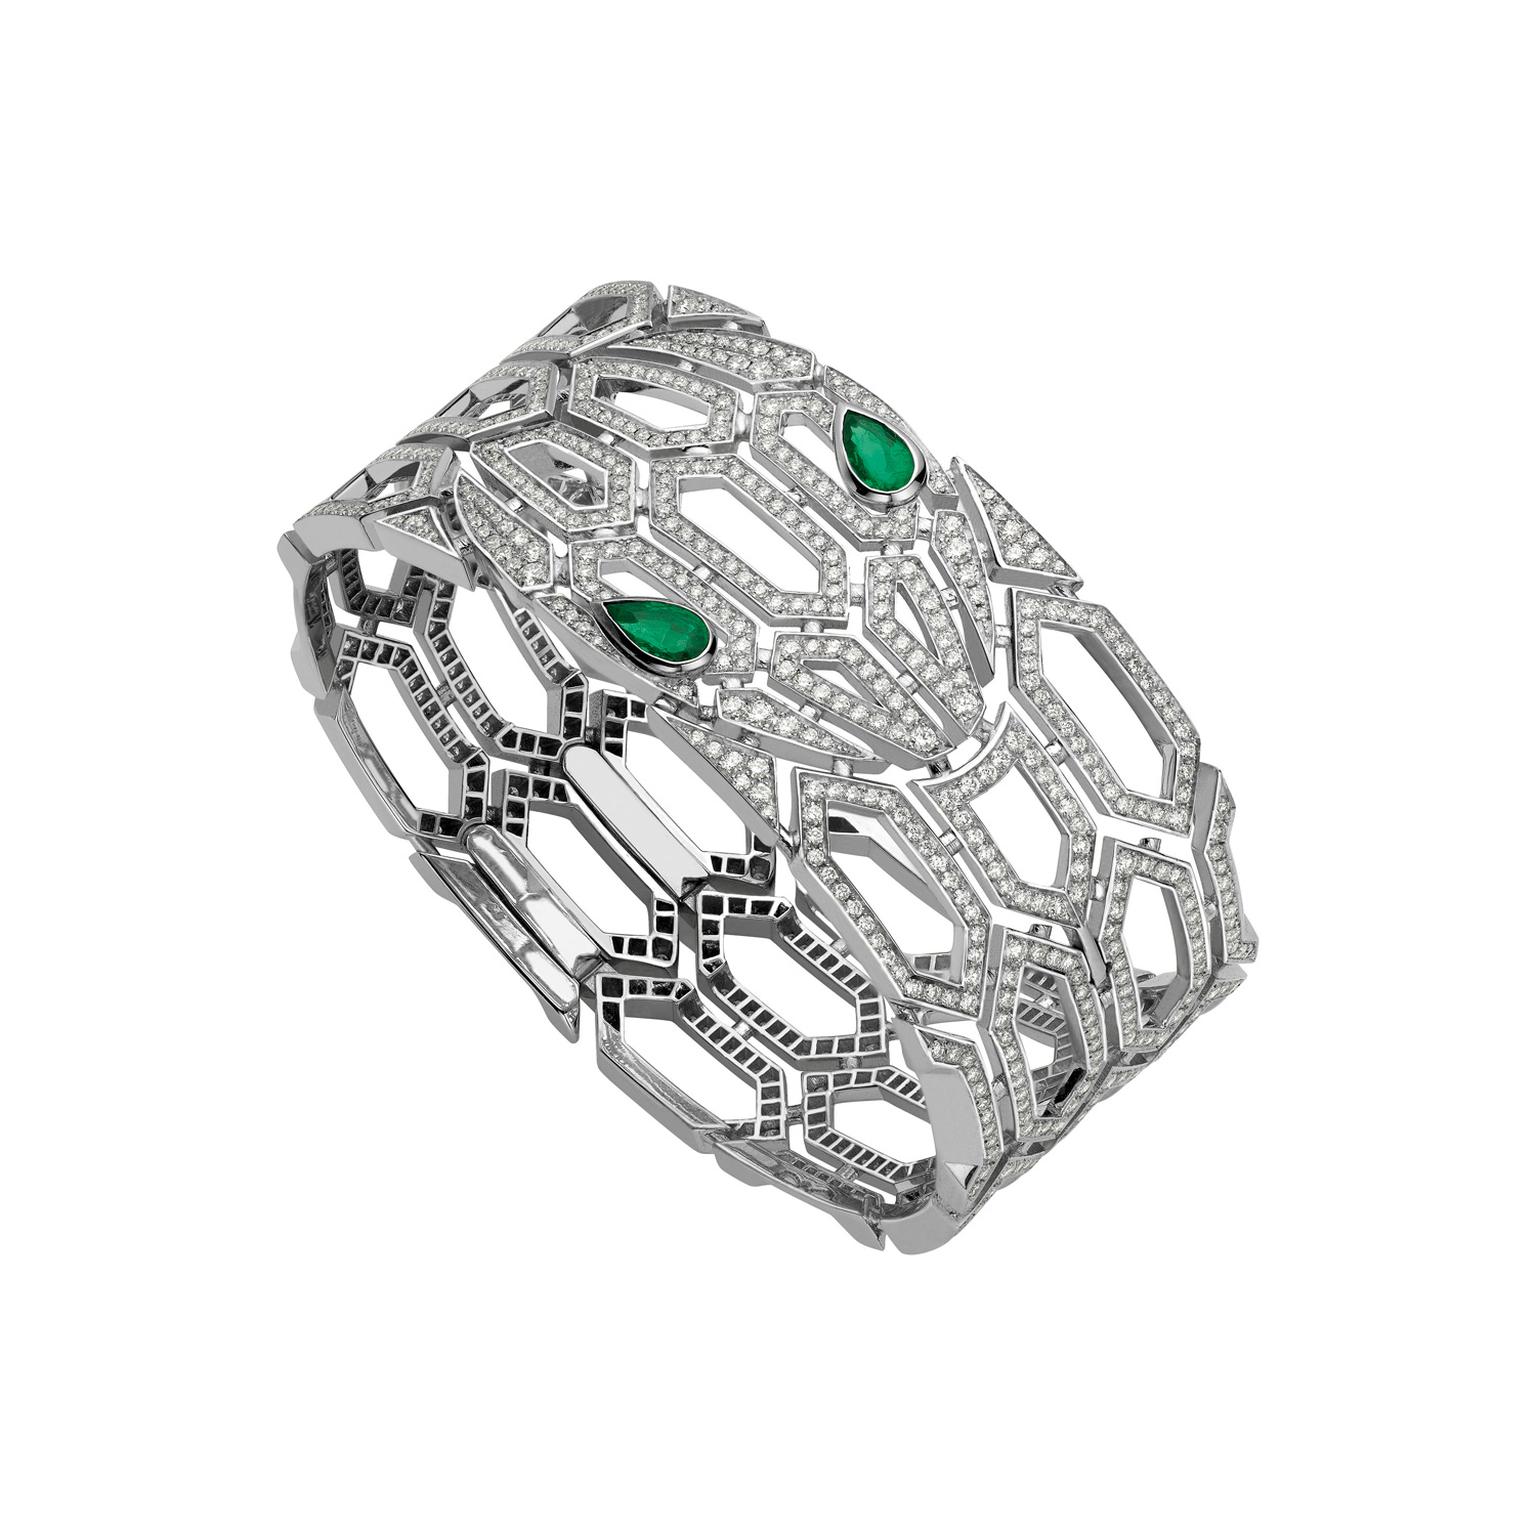 Bulgari Serpenti Seduttori white gold bracelet with emeralds